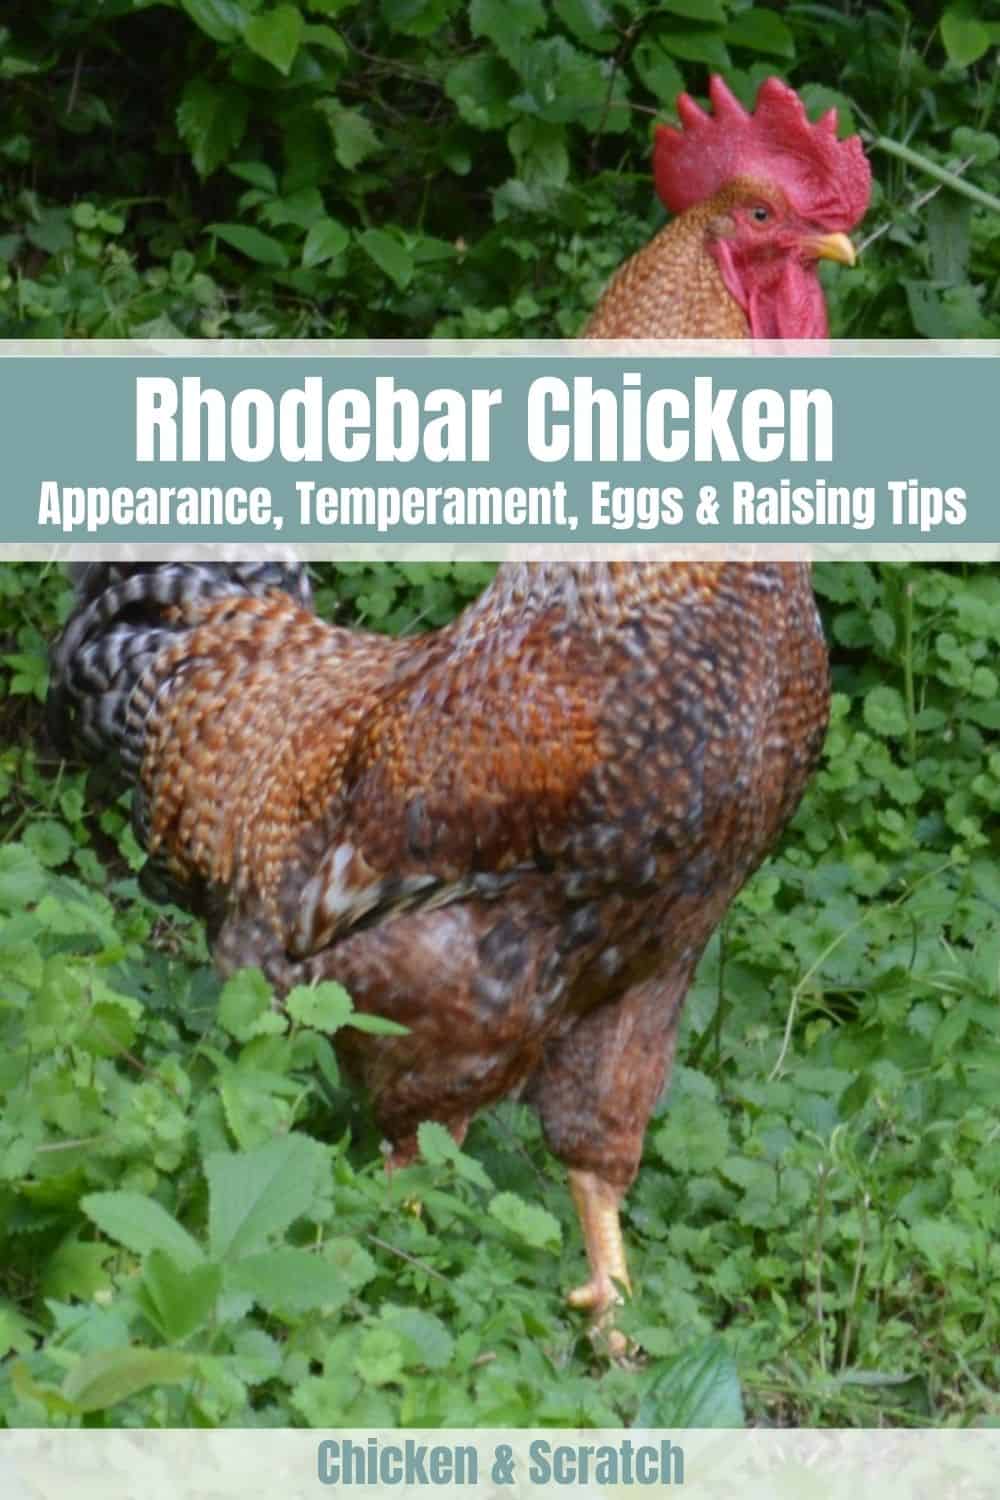 Rhodebar Chicken: Appearance, Temperament, Eggs and Raising Tips